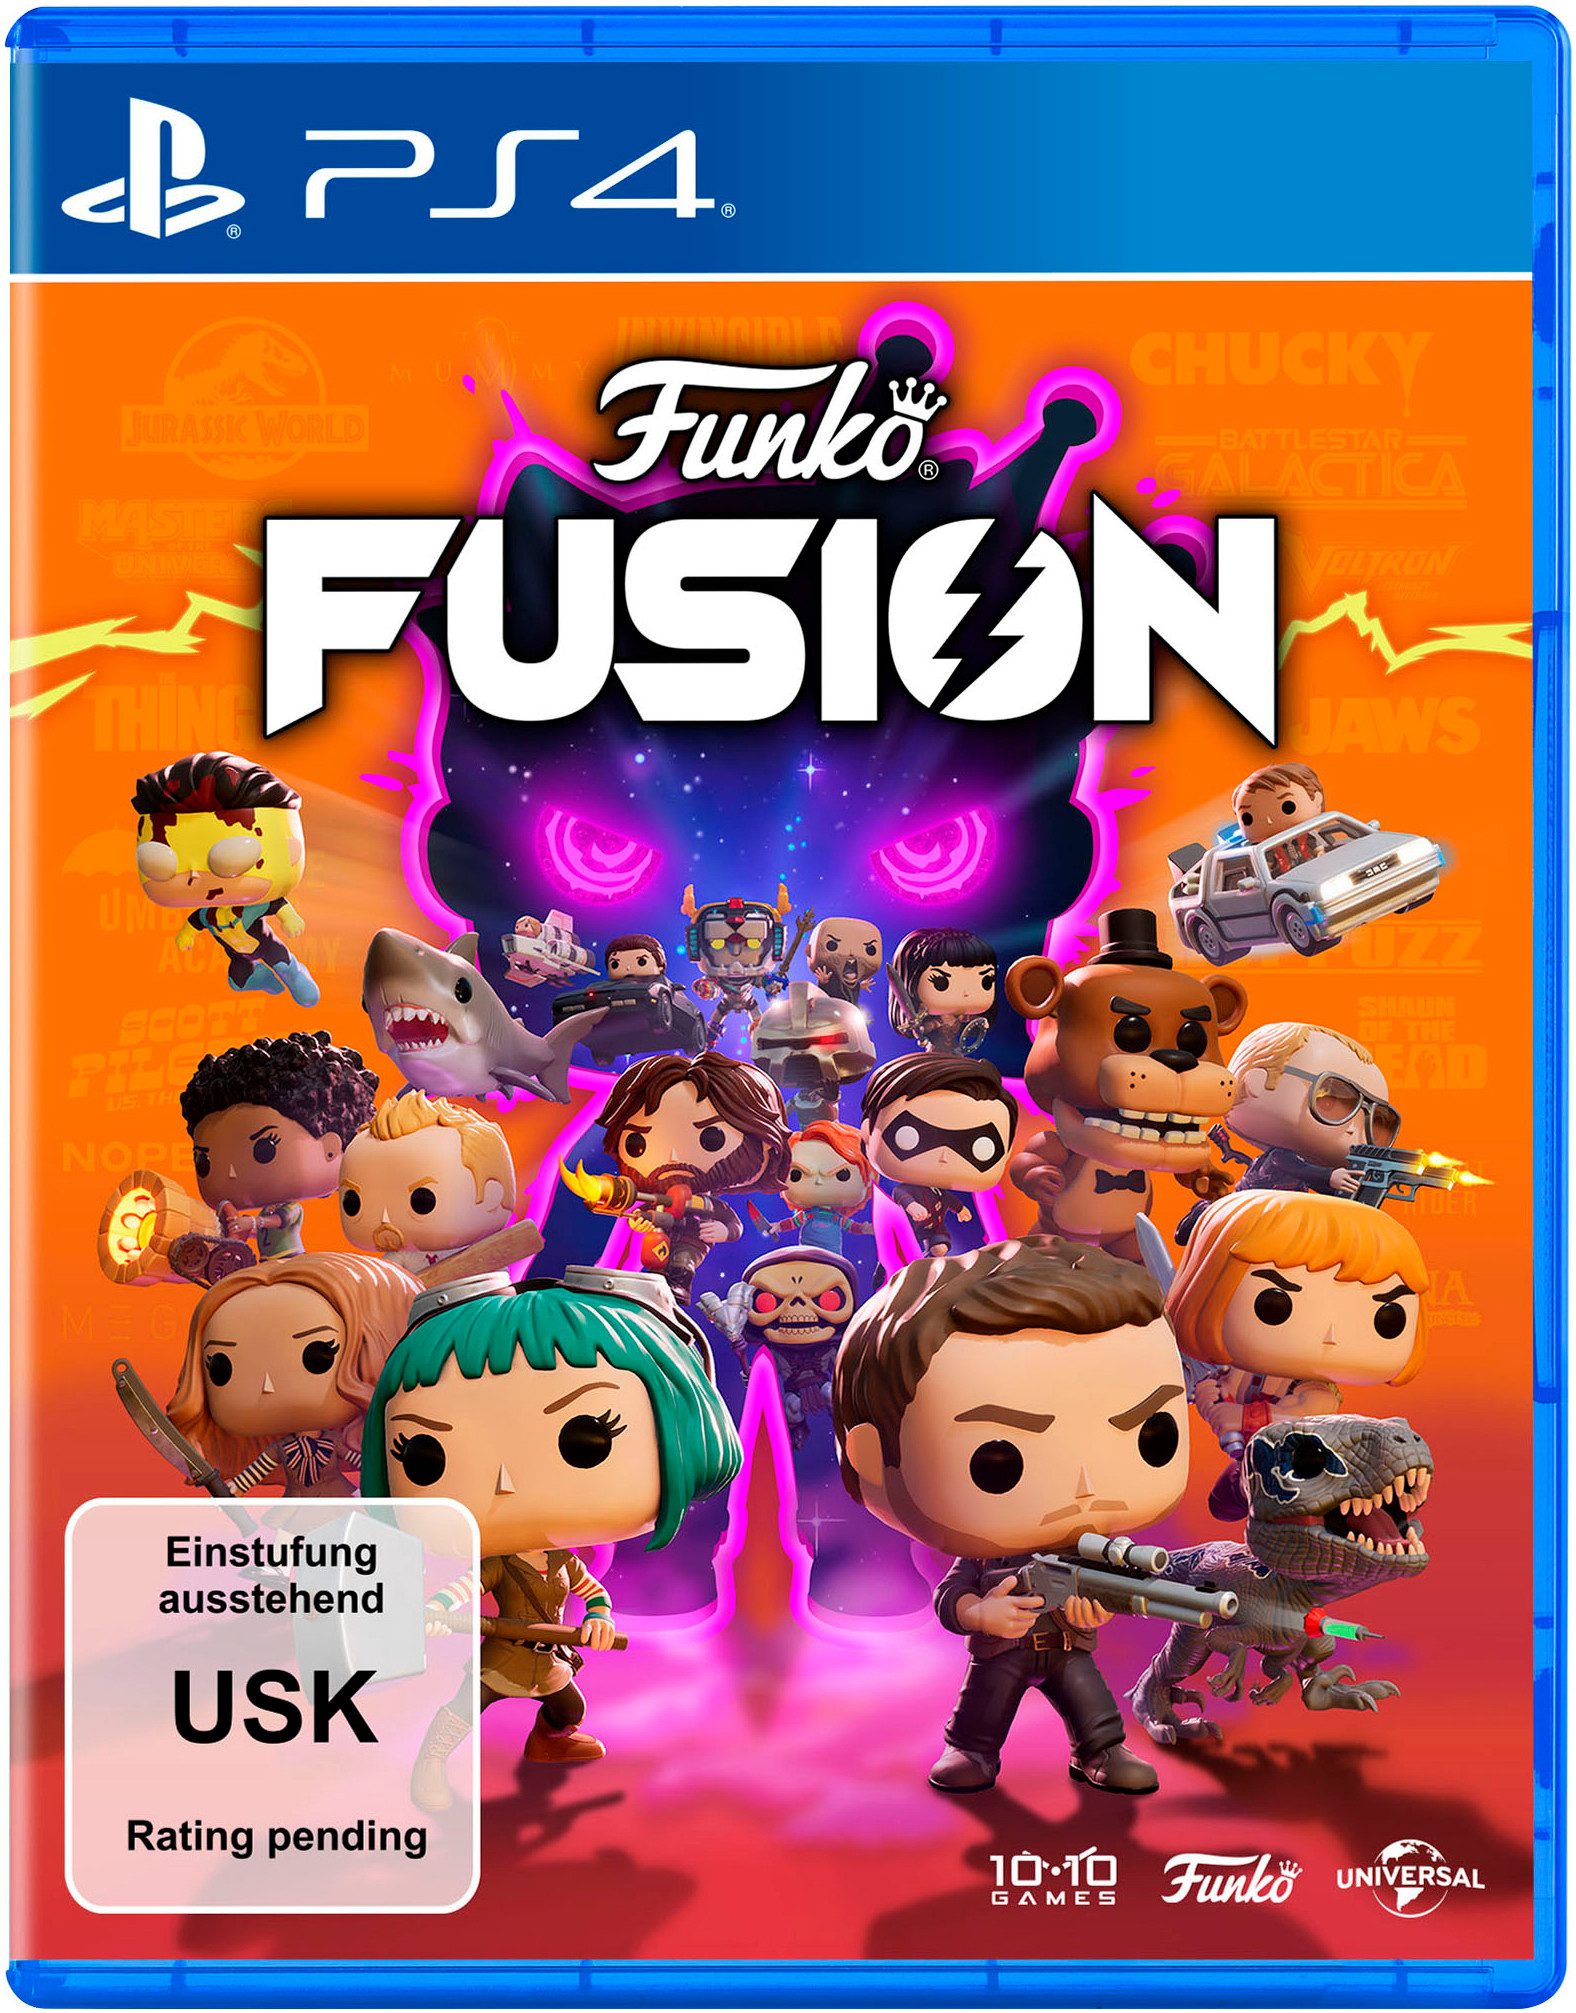 Funko Fusion PlayStation 4